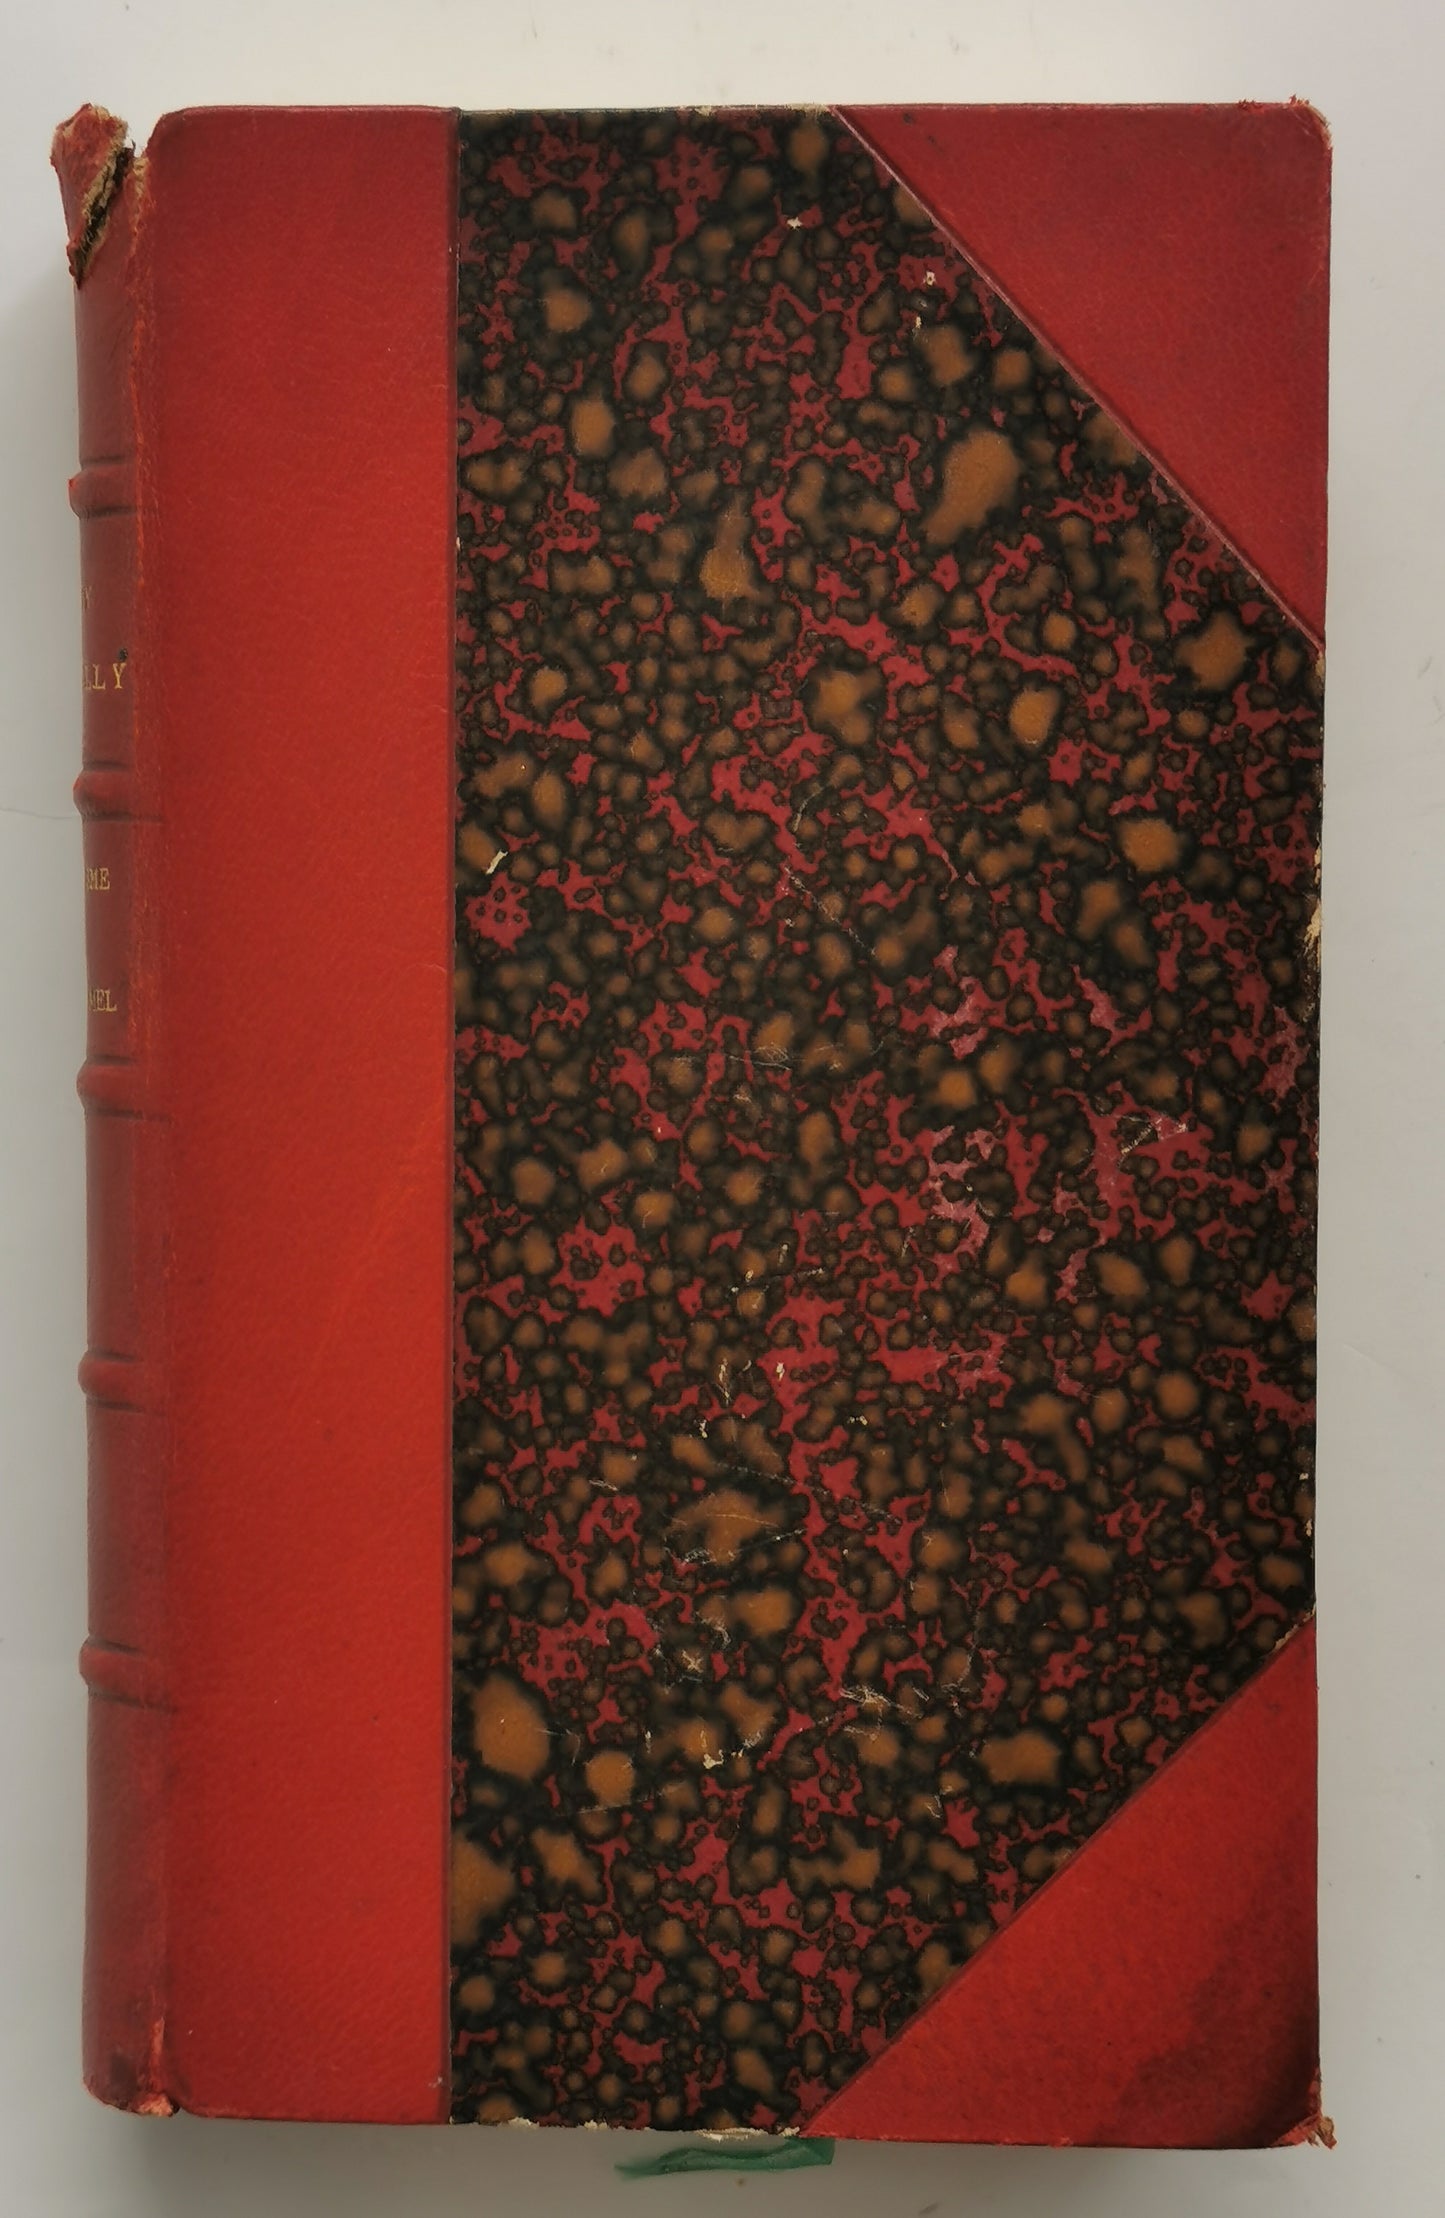 Du dandysme et de G. Brummel, Memoranda, J. Barbey d'Aurevillly, Alphonse Lemerre, 1887.